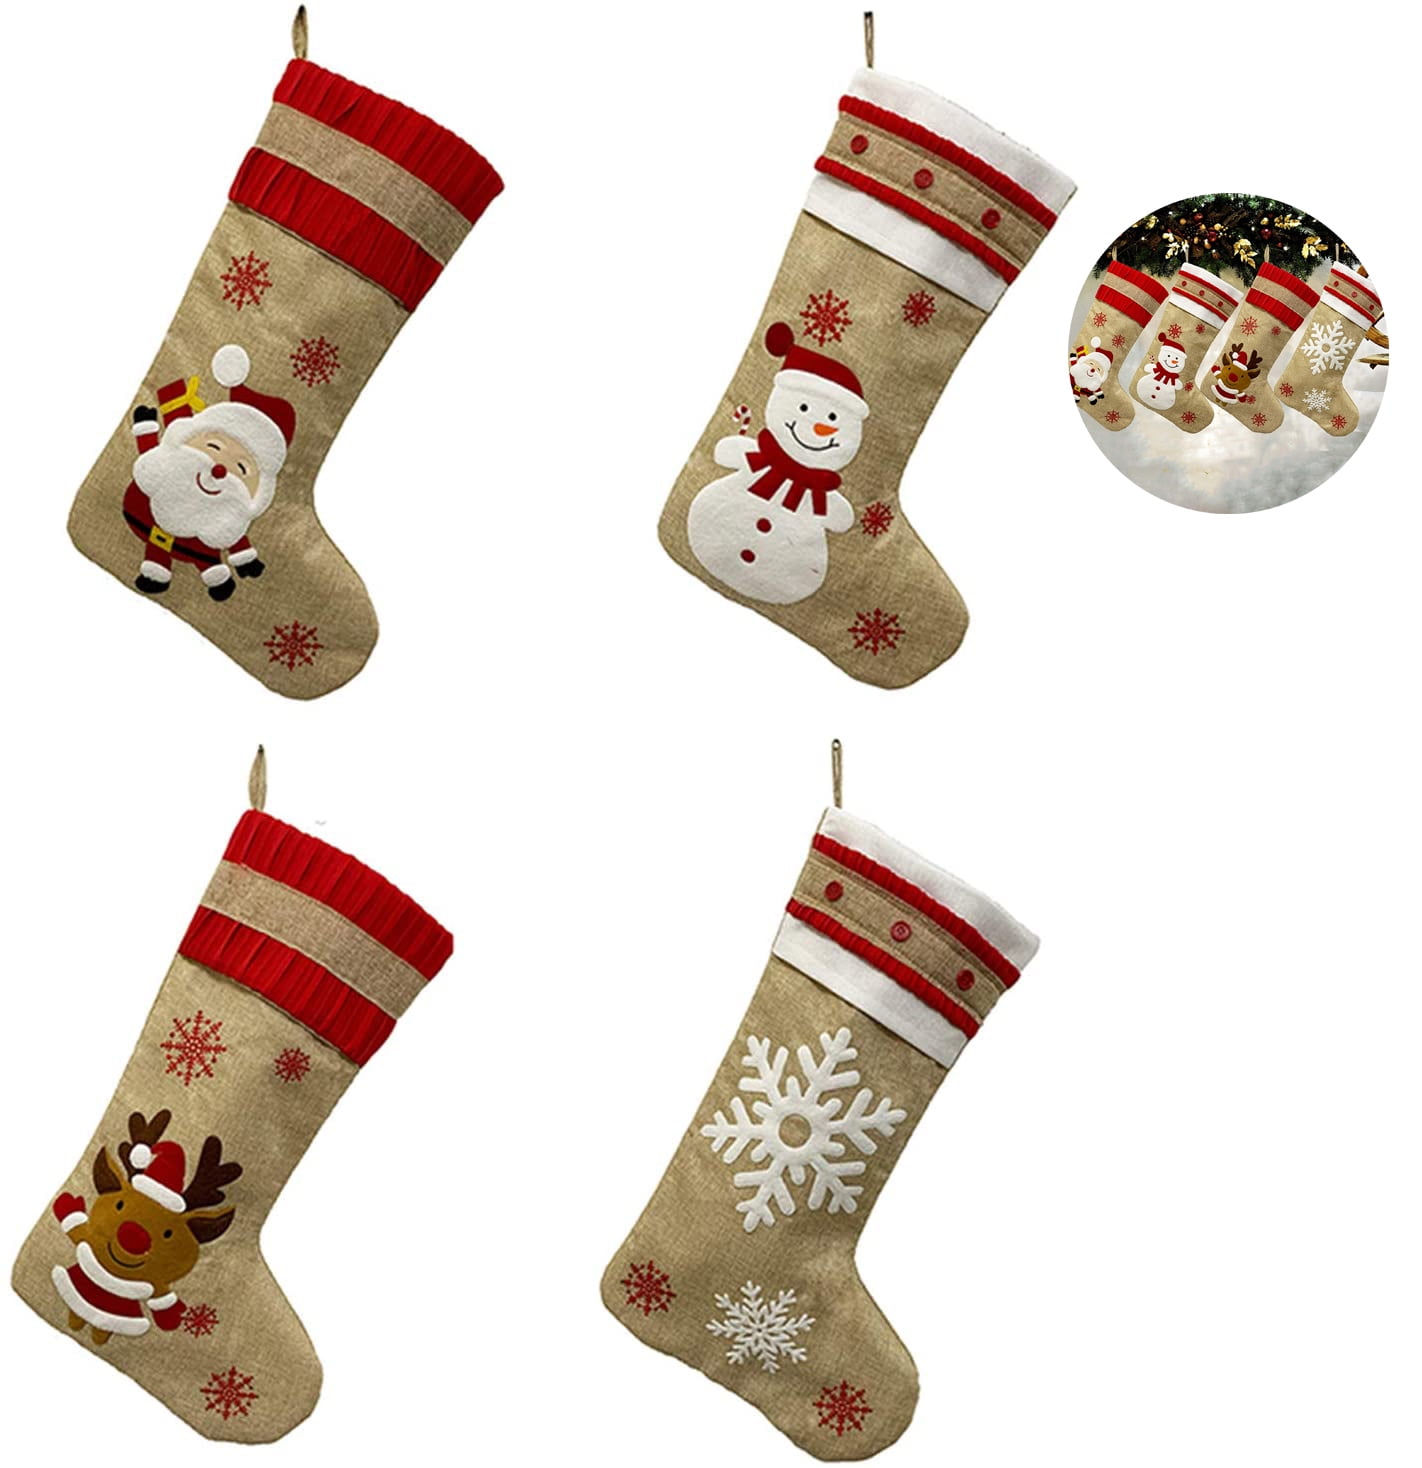 Decoration Socks Bag Burlap Canvas Stocking Canvas Socks Christmas Gift Bags 